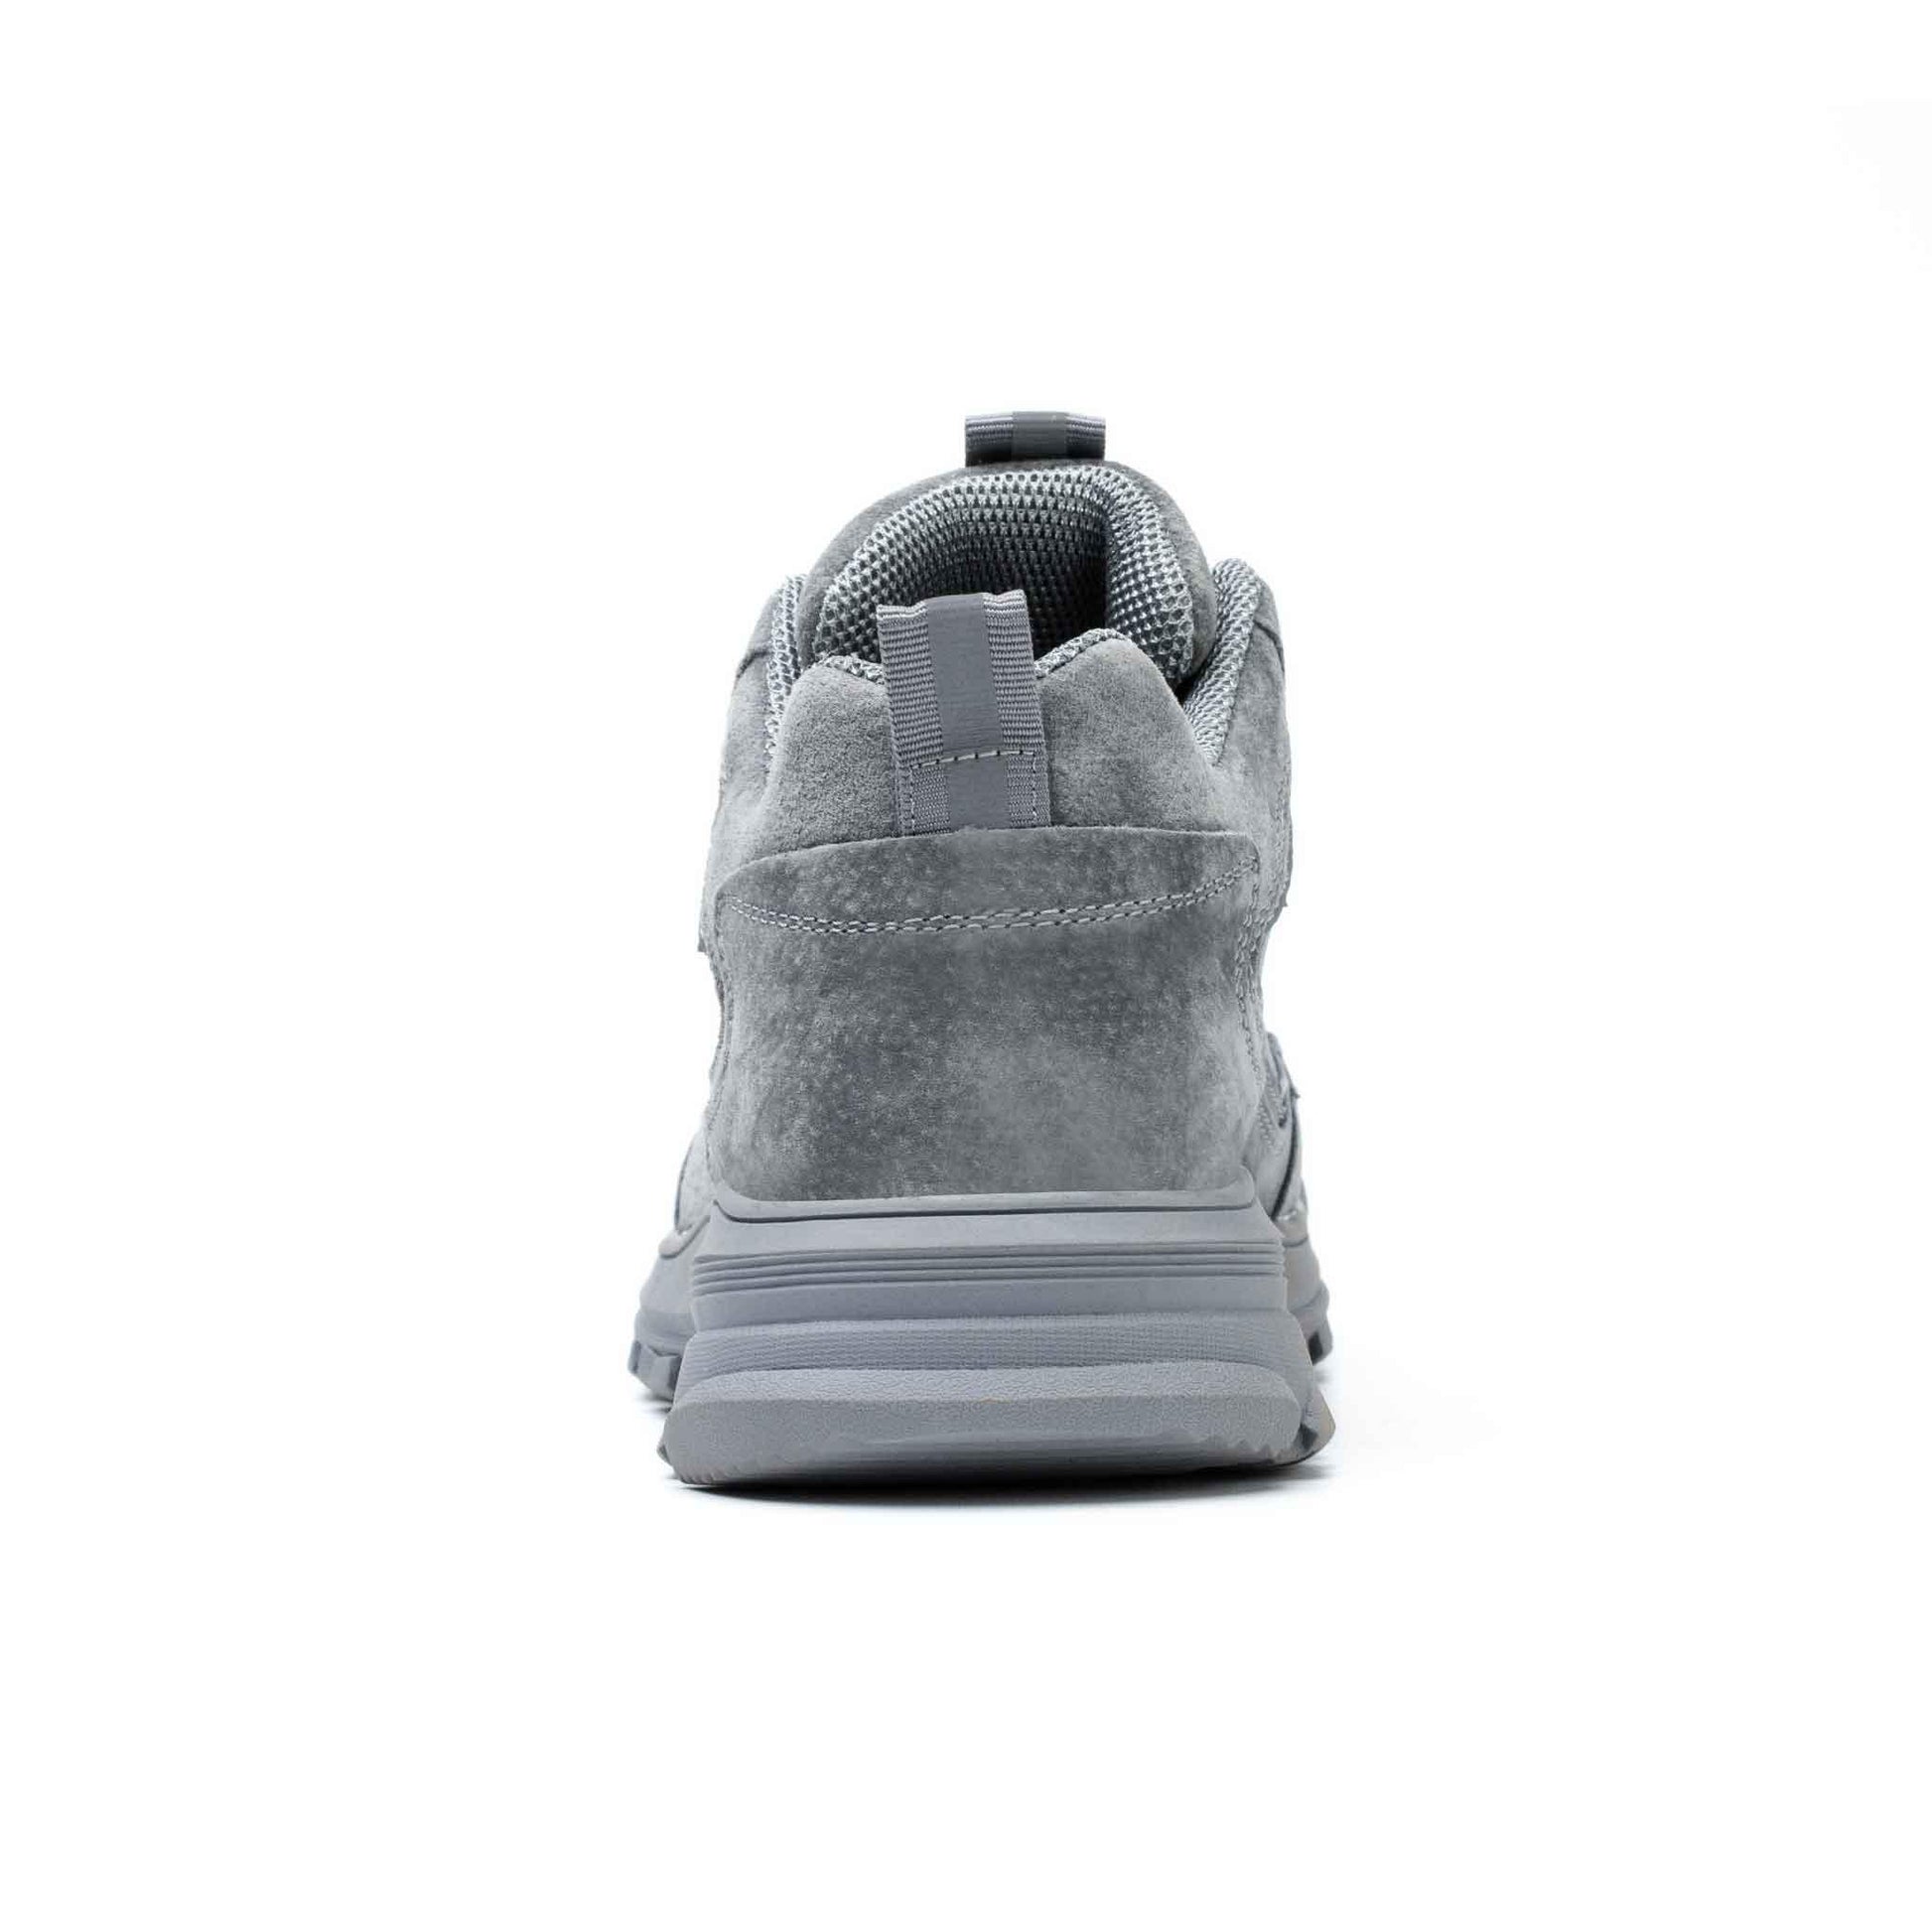 Men's Composite Toe Work Boots - Slip Resistant | B208 - USINE PRO Footwear